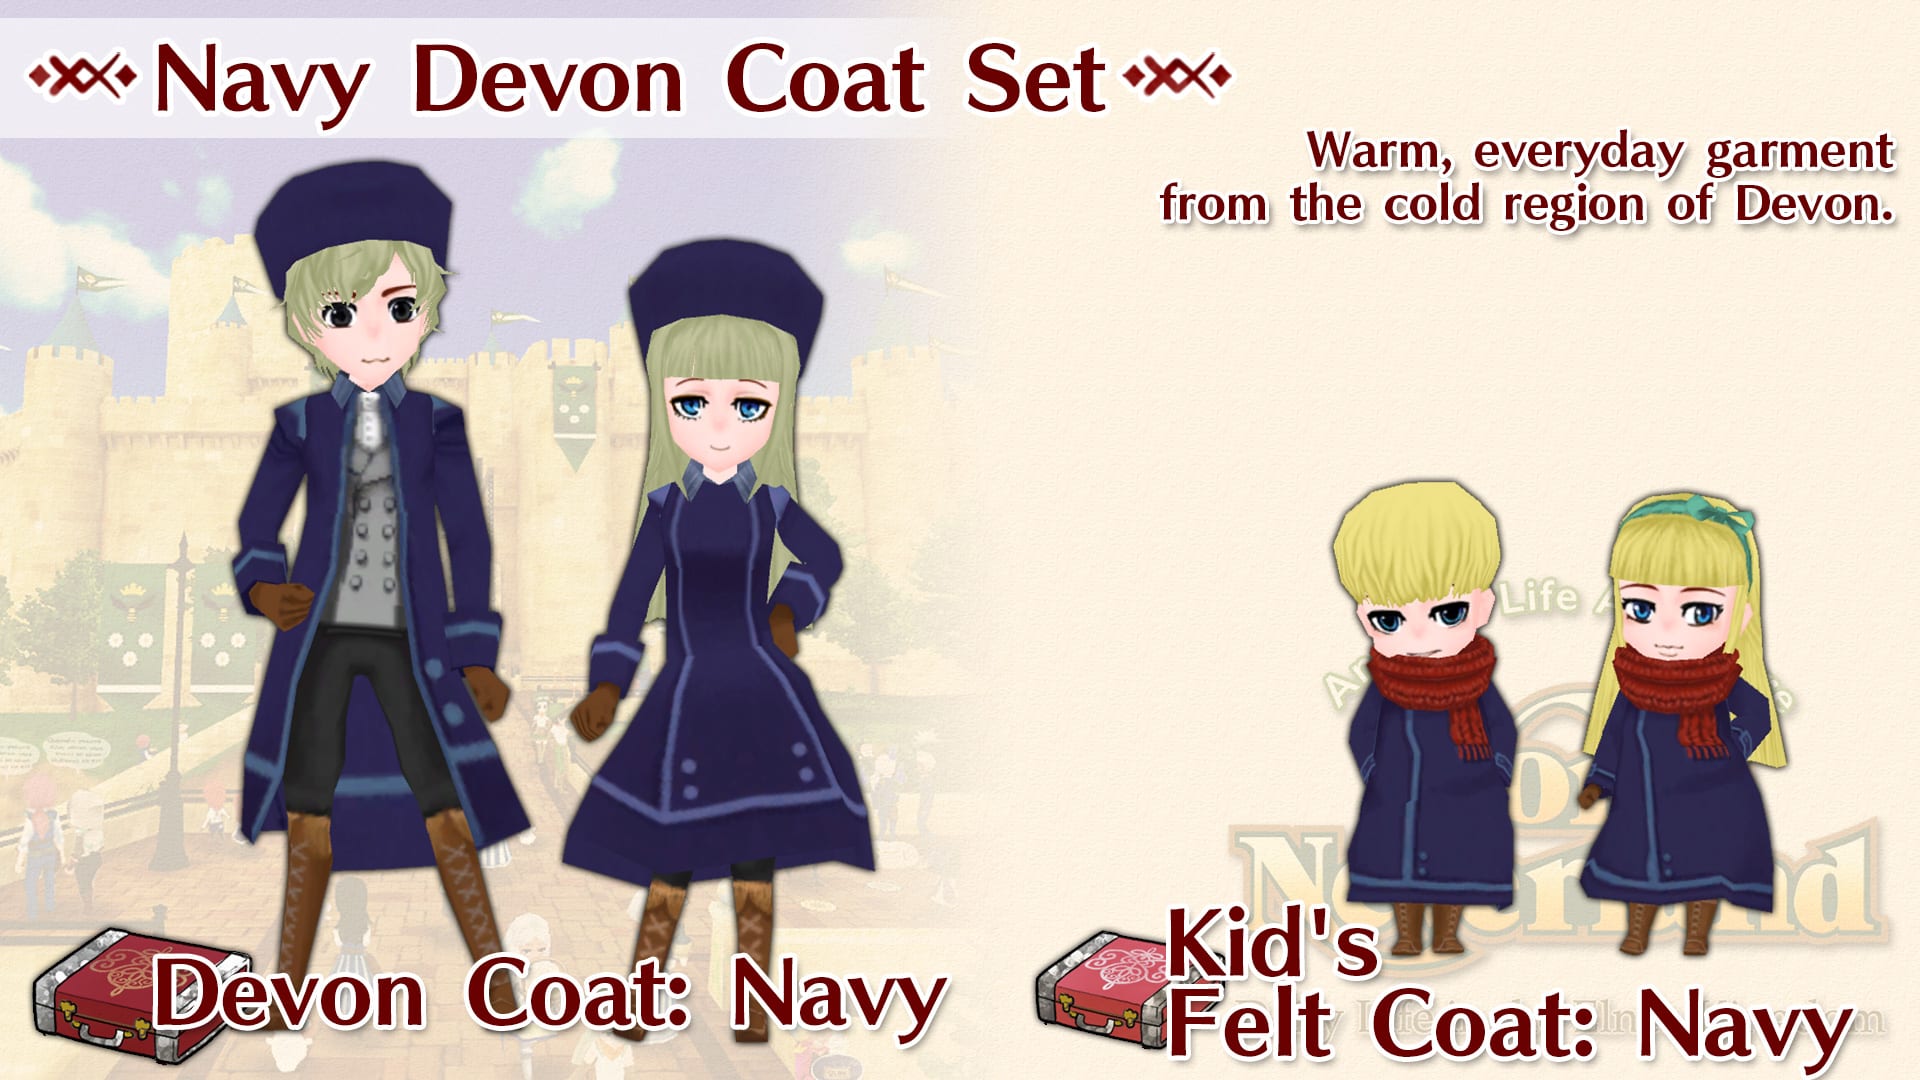 Navy Devon Coat Set